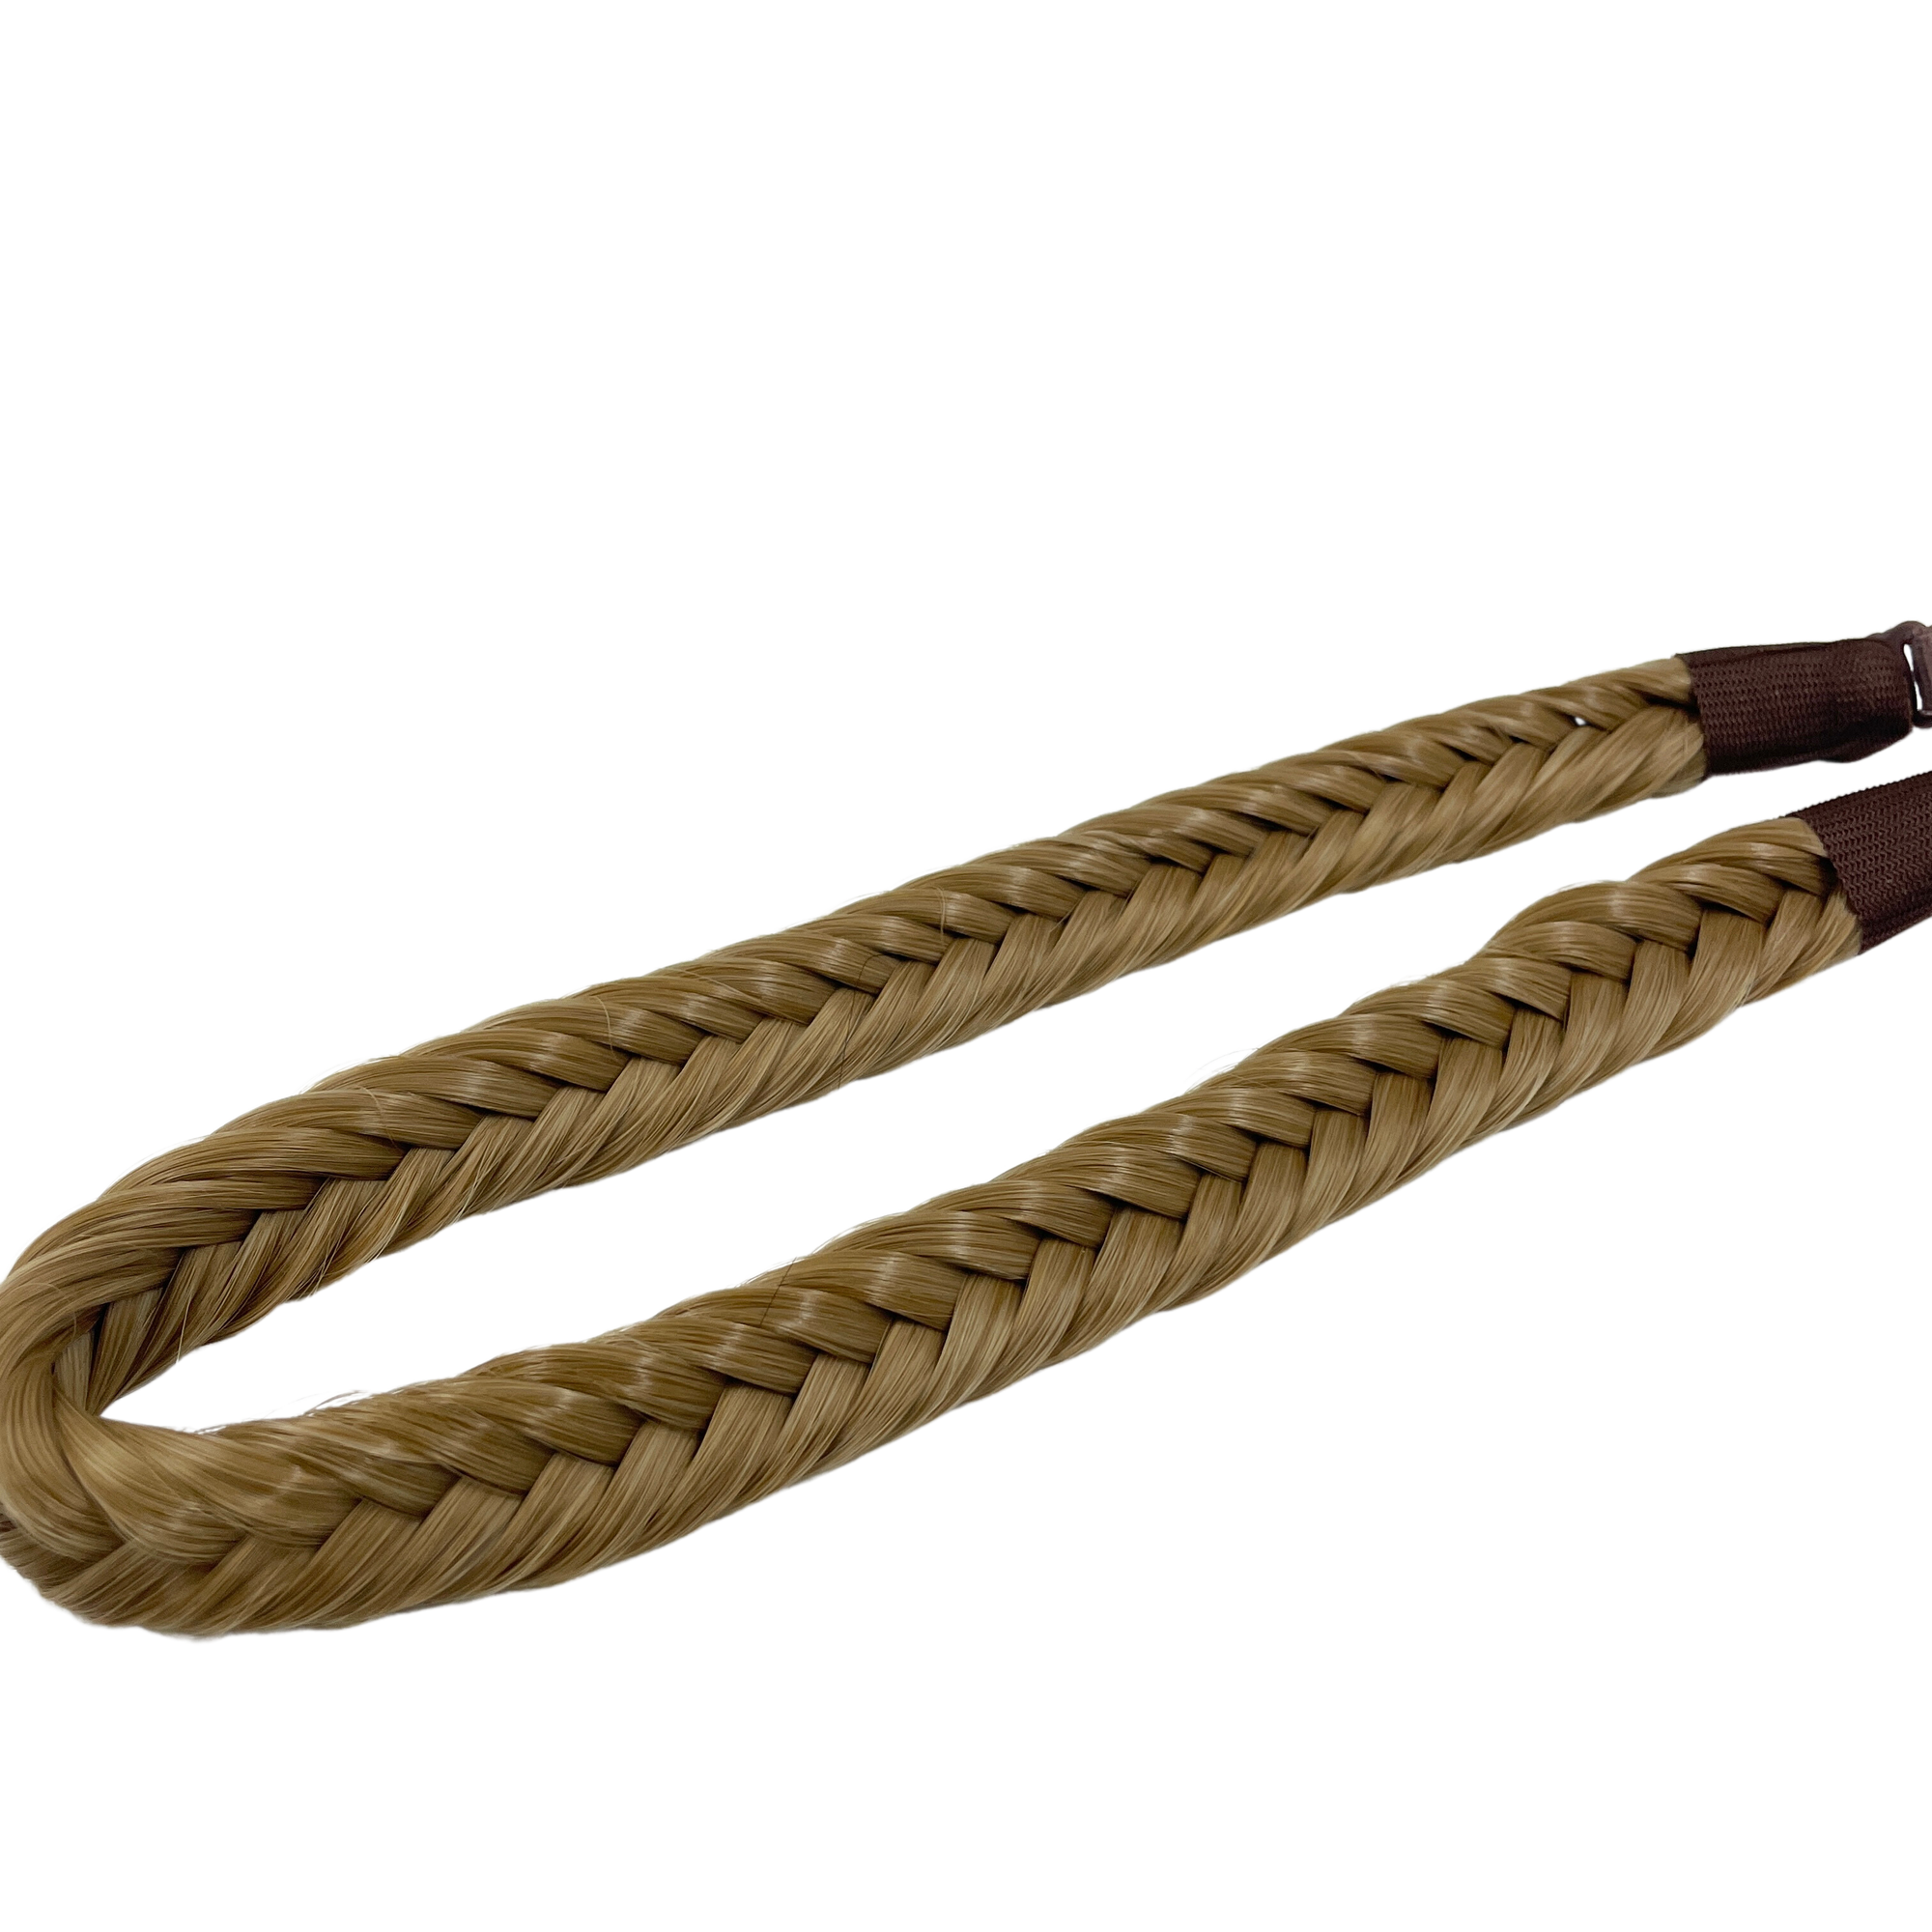 image of hair rehab london plait braid fishtail headband hairband in shade toffee